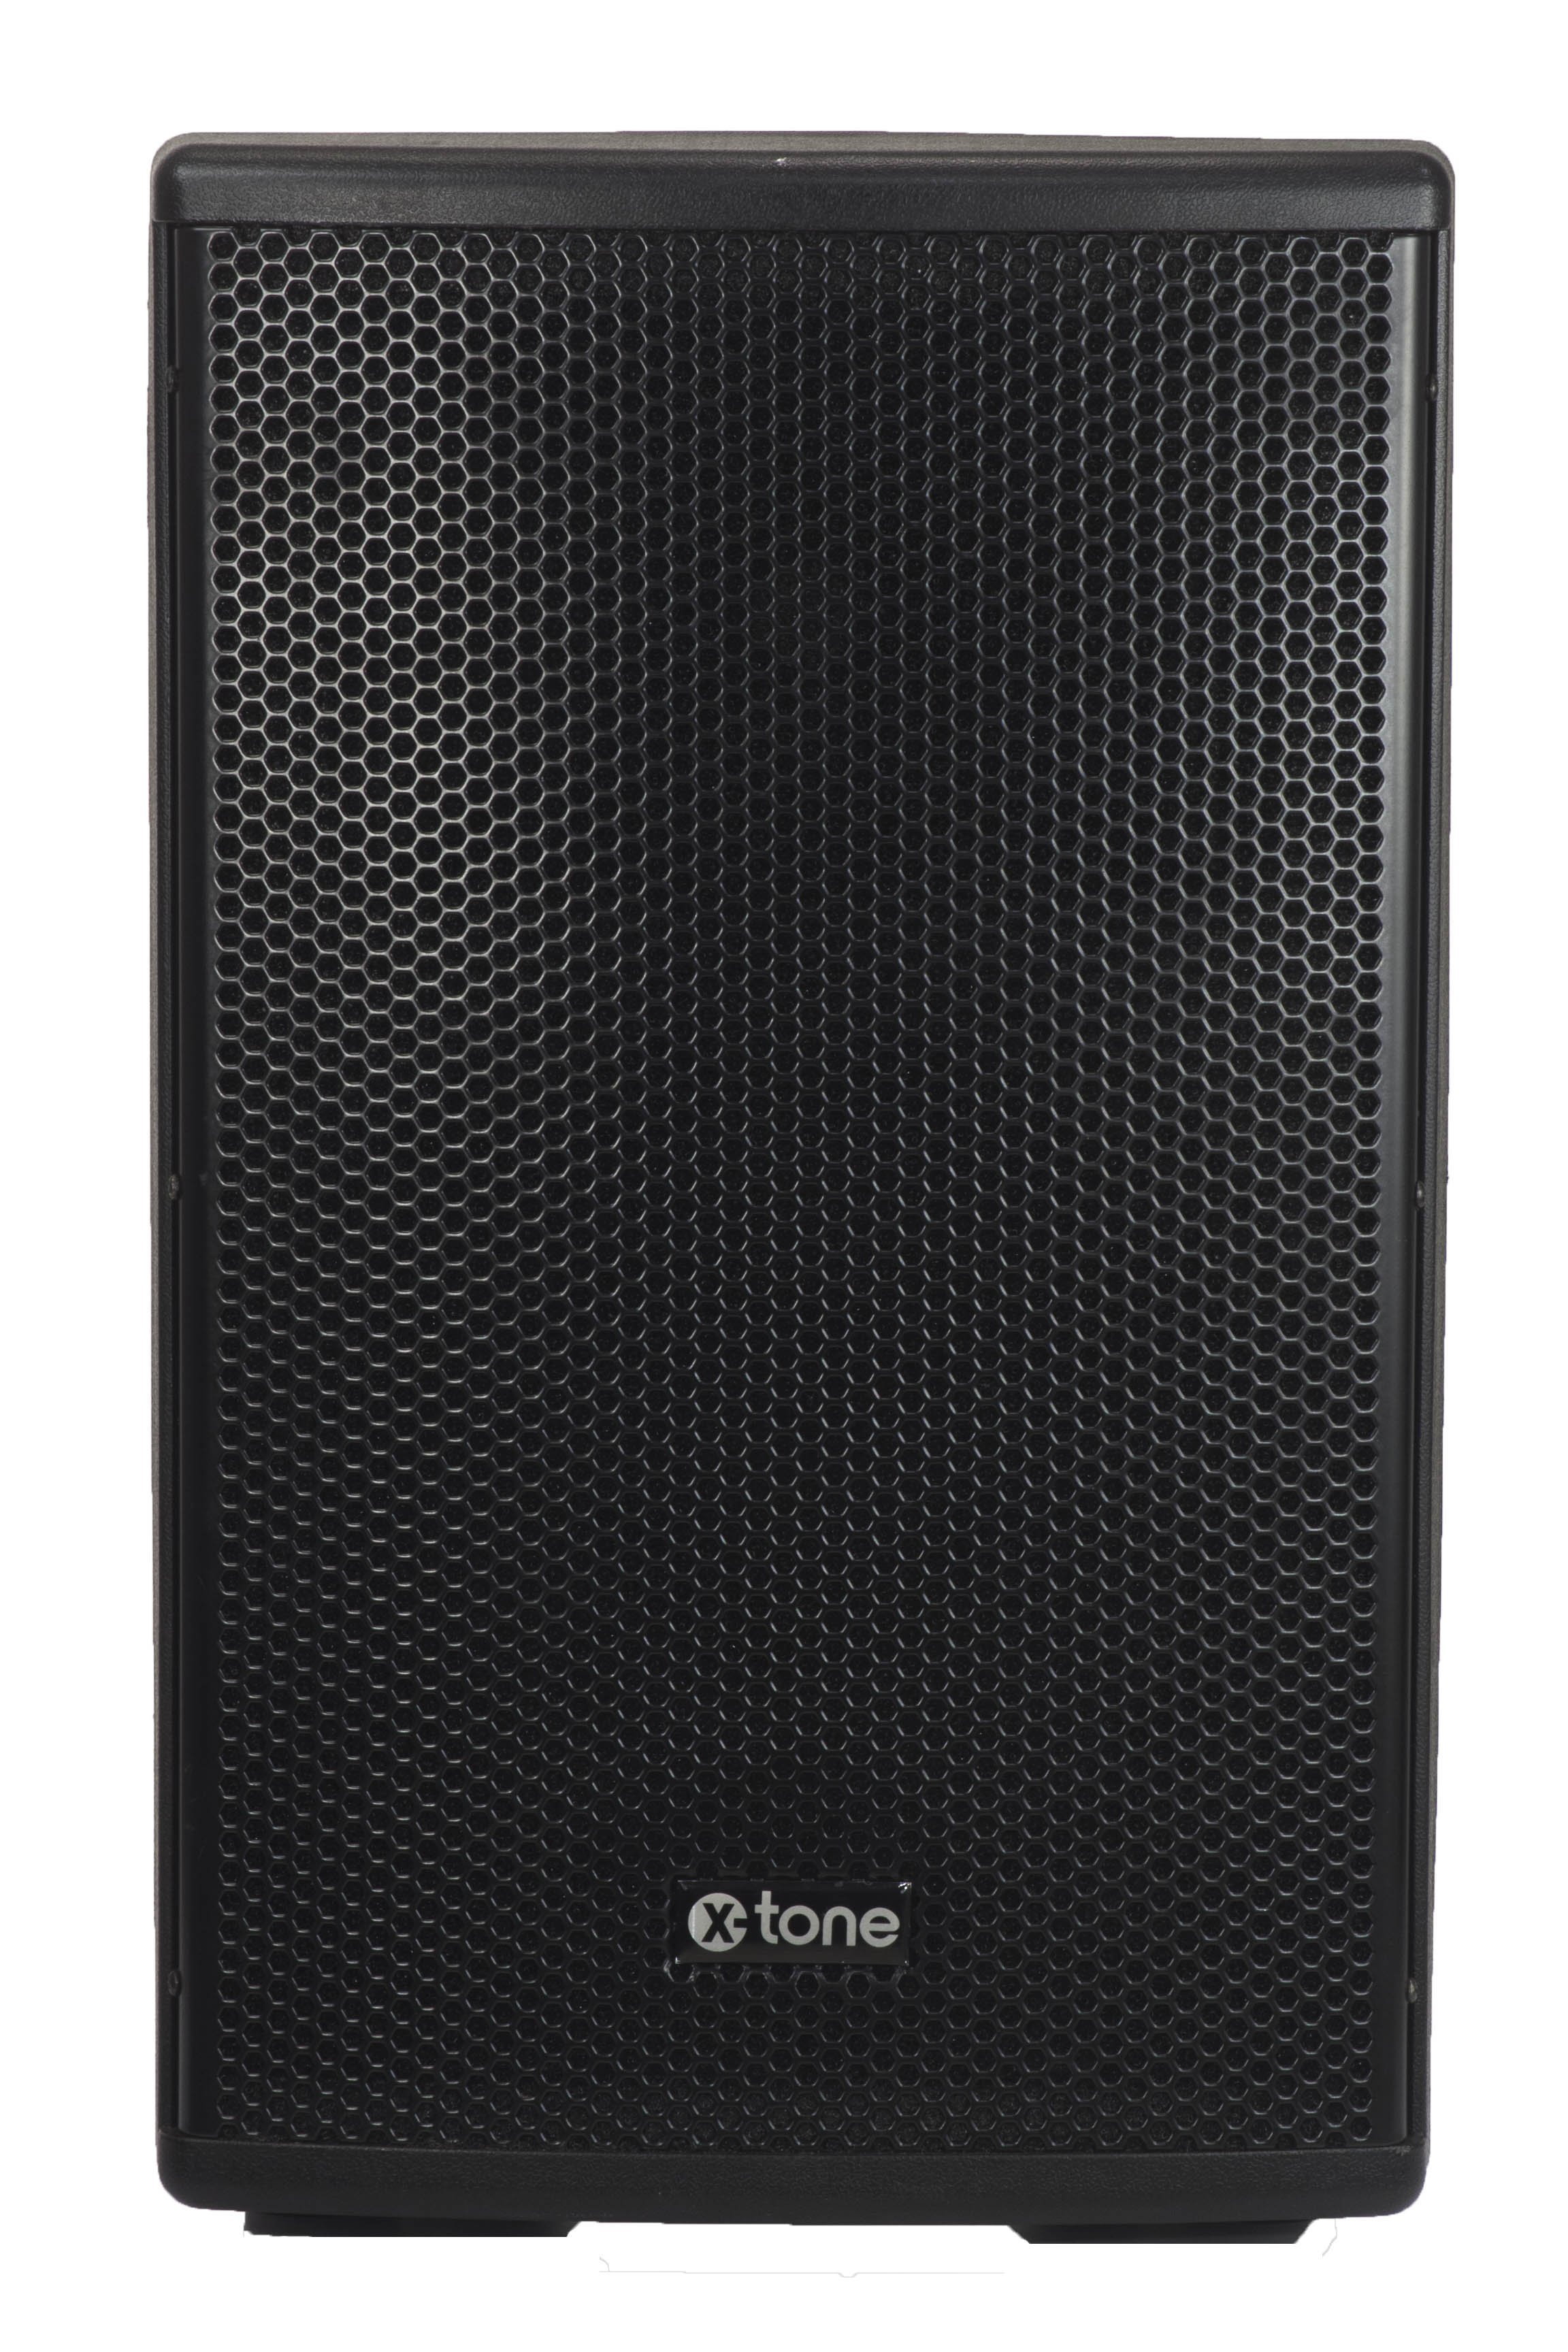 X-tone Xts-10 - Active full-range speaker - Variation 1